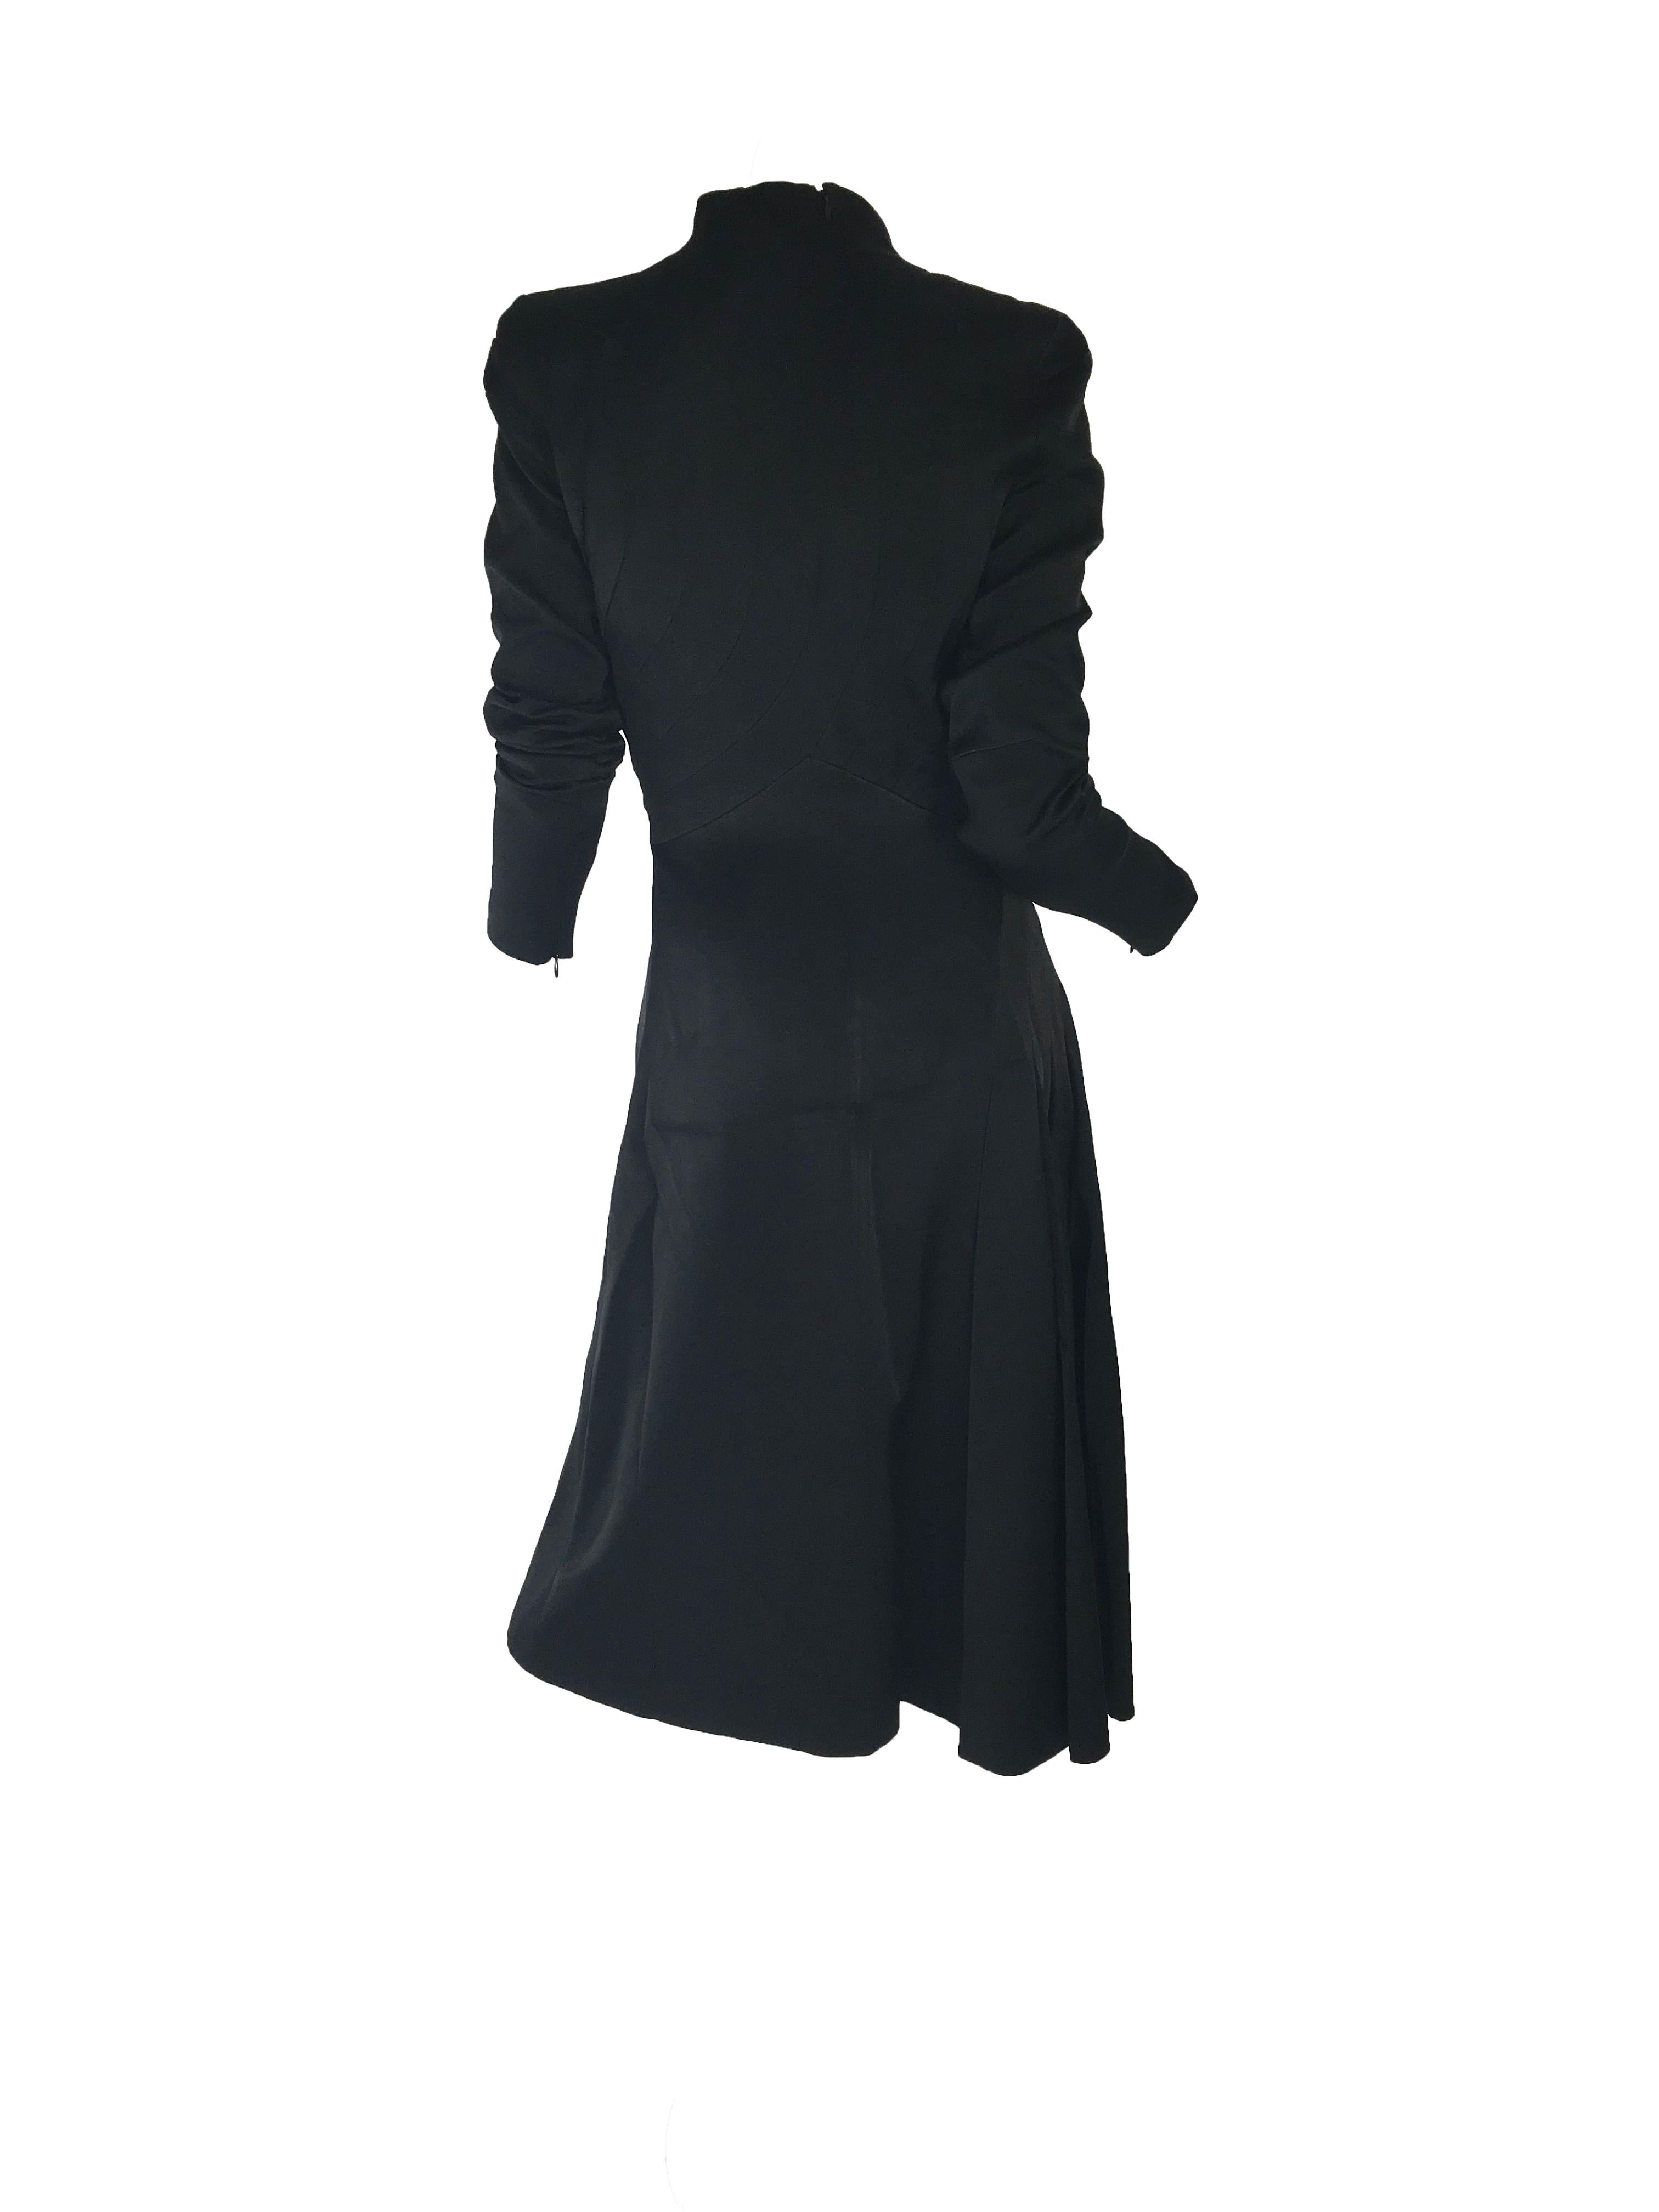 1990s black John Galliano dress with diagonal seams 1